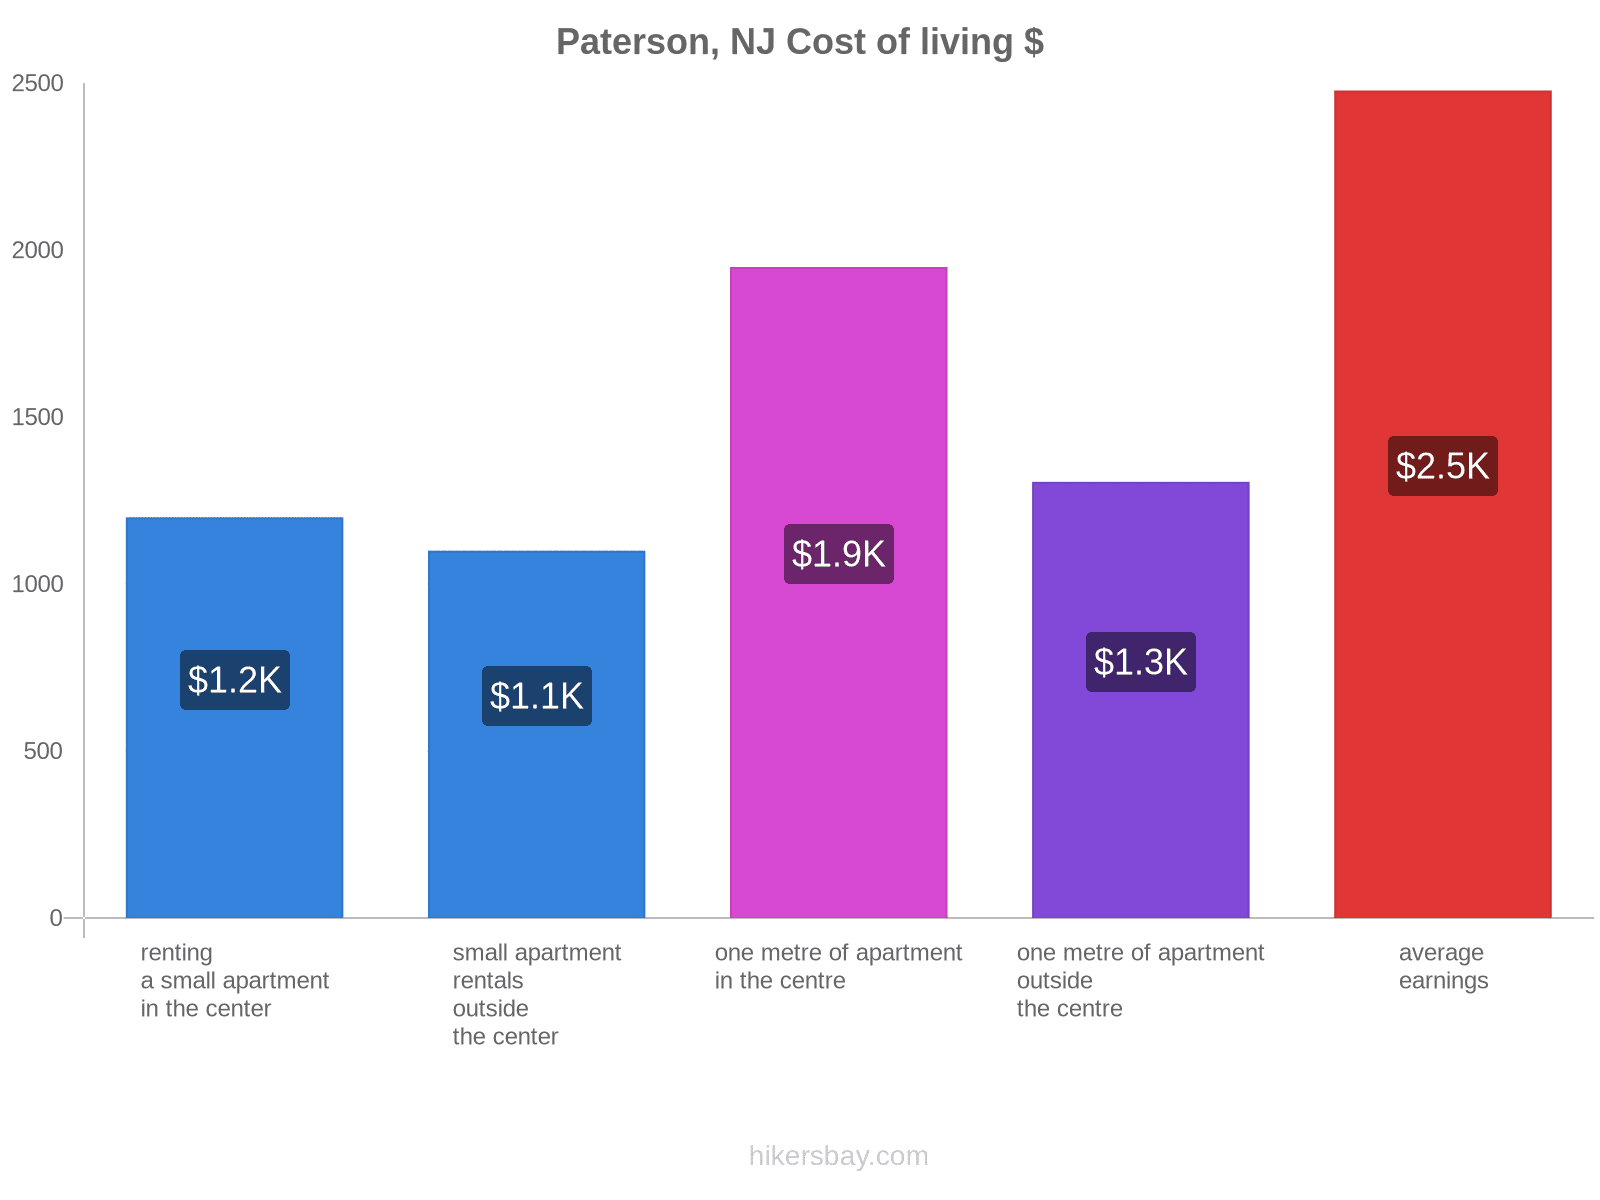 Paterson, NJ cost of living hikersbay.com